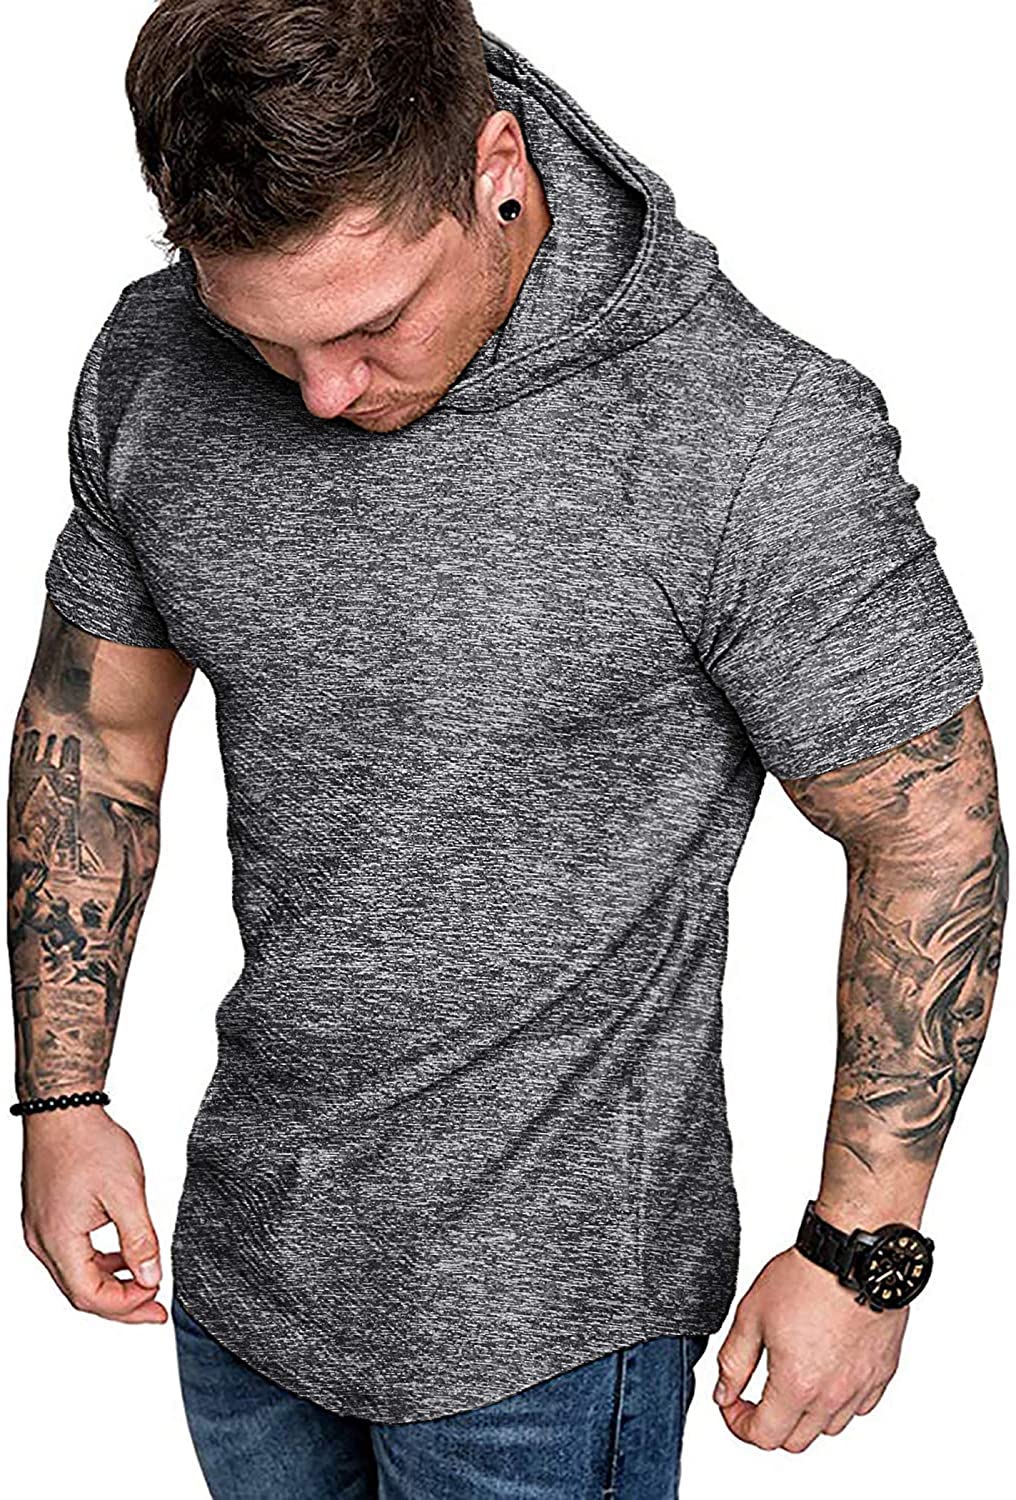 COOFANDY Mens Gym Workout Hoodies Athletic Bodybuilding Muscle Lightweight Hooded Sweatshirts 